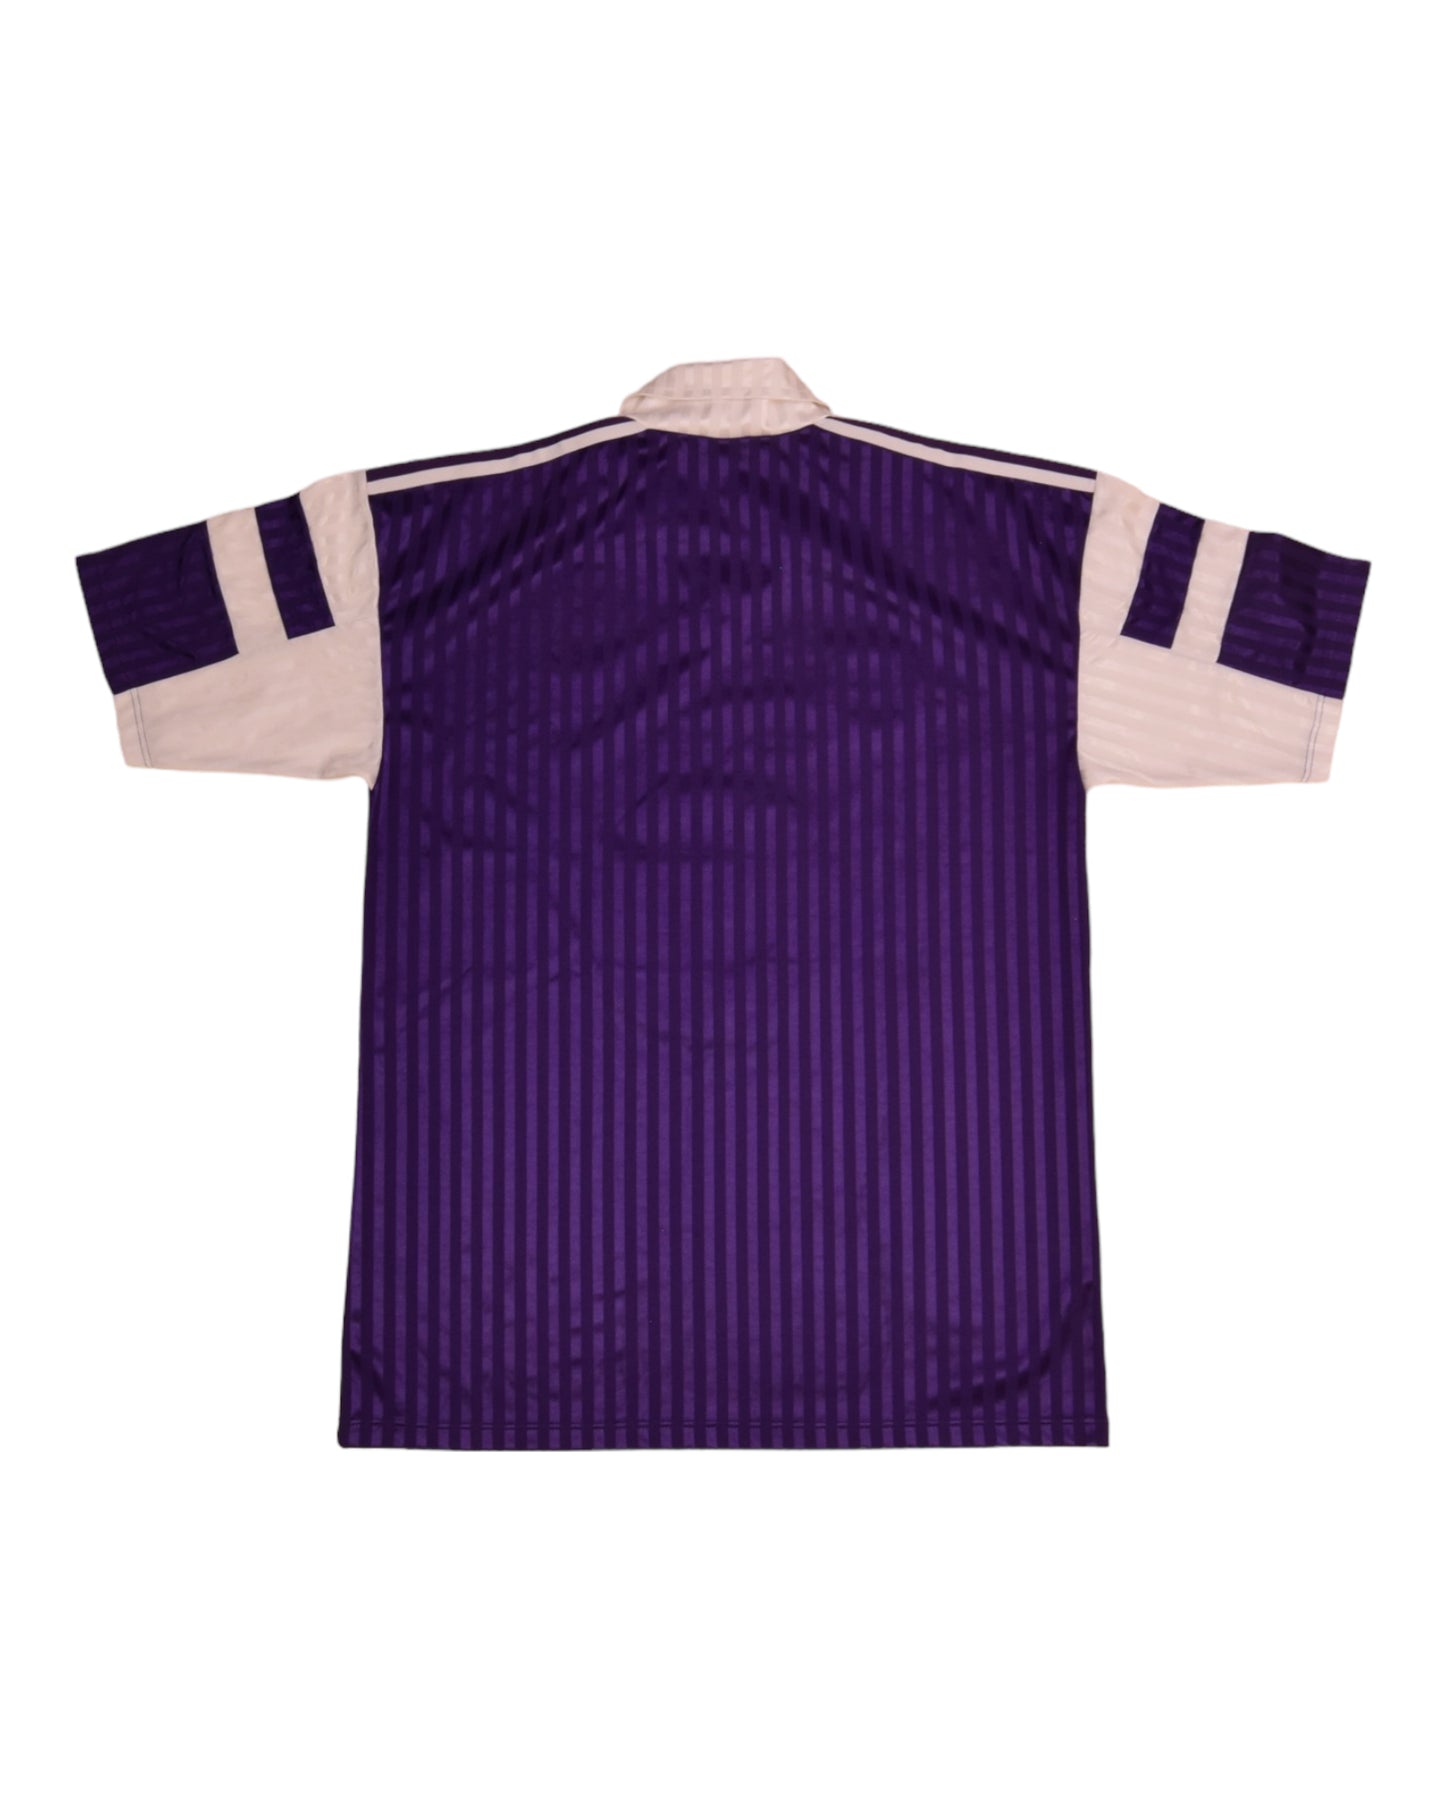 R.S.C. Anderlecht Bruxelles Adidas 1989 1990 1991 1992 Away Football Shirt Made in UK Size L